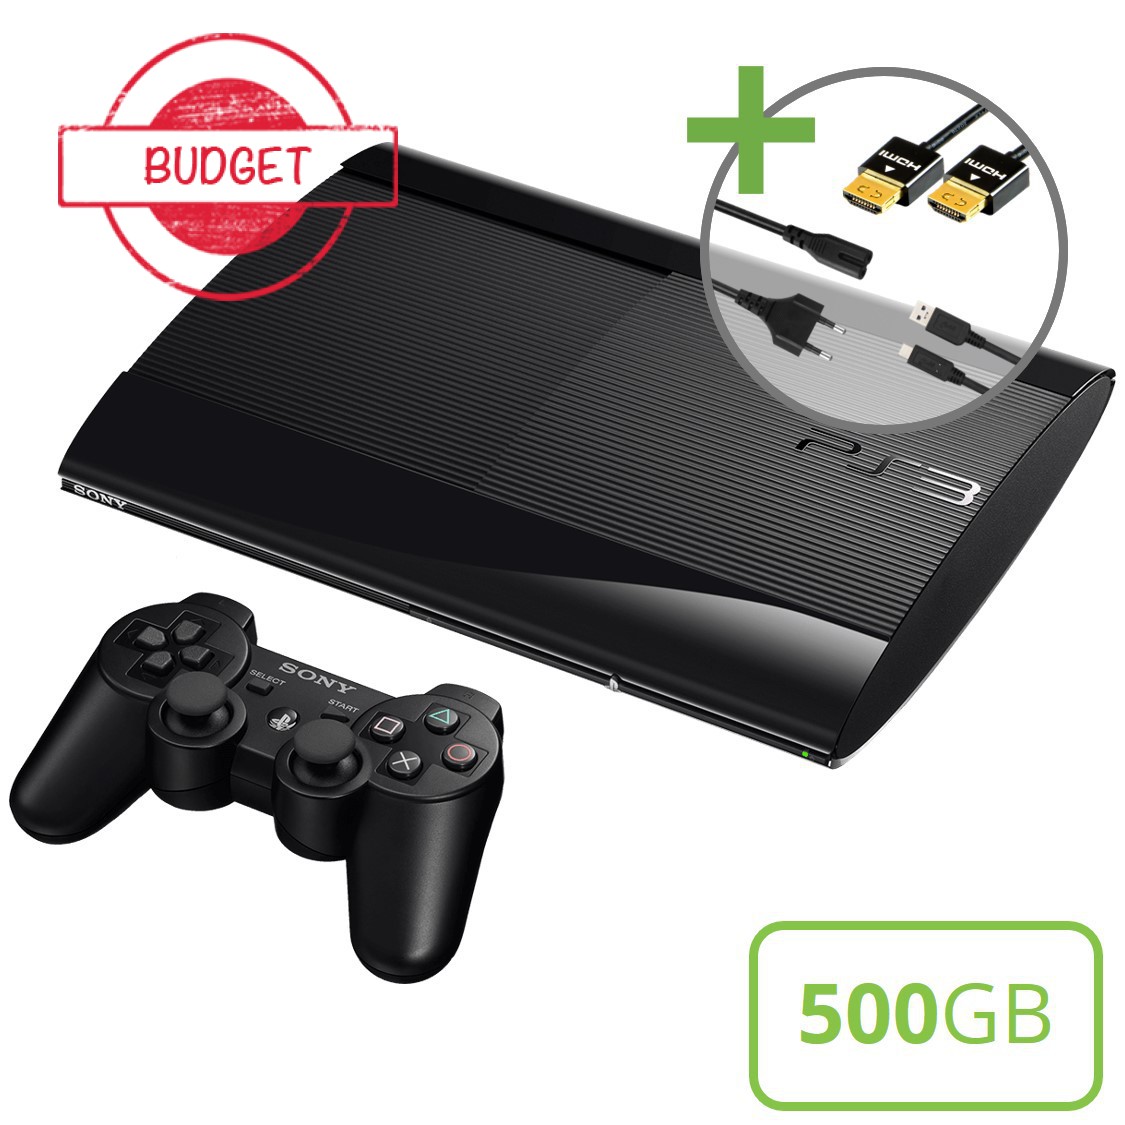 Sony PlayStation 3 Super Slim (500GB) Starter Pack - DualShock Edition - Budget - Playstation 3 Hardware